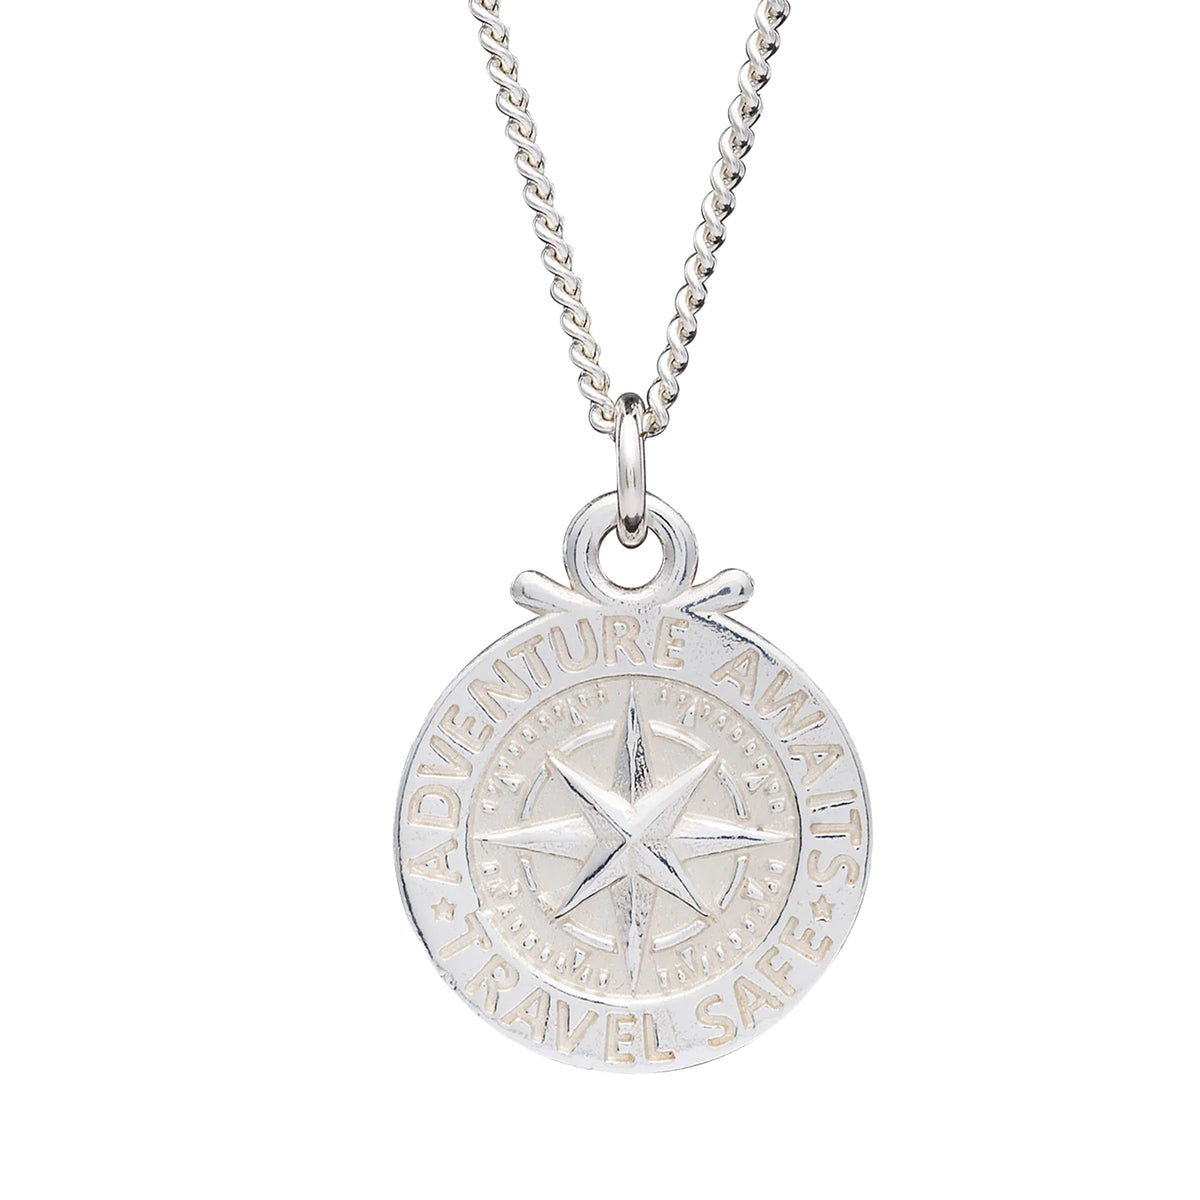 mens silver travel safe gift necklace adventure pendant